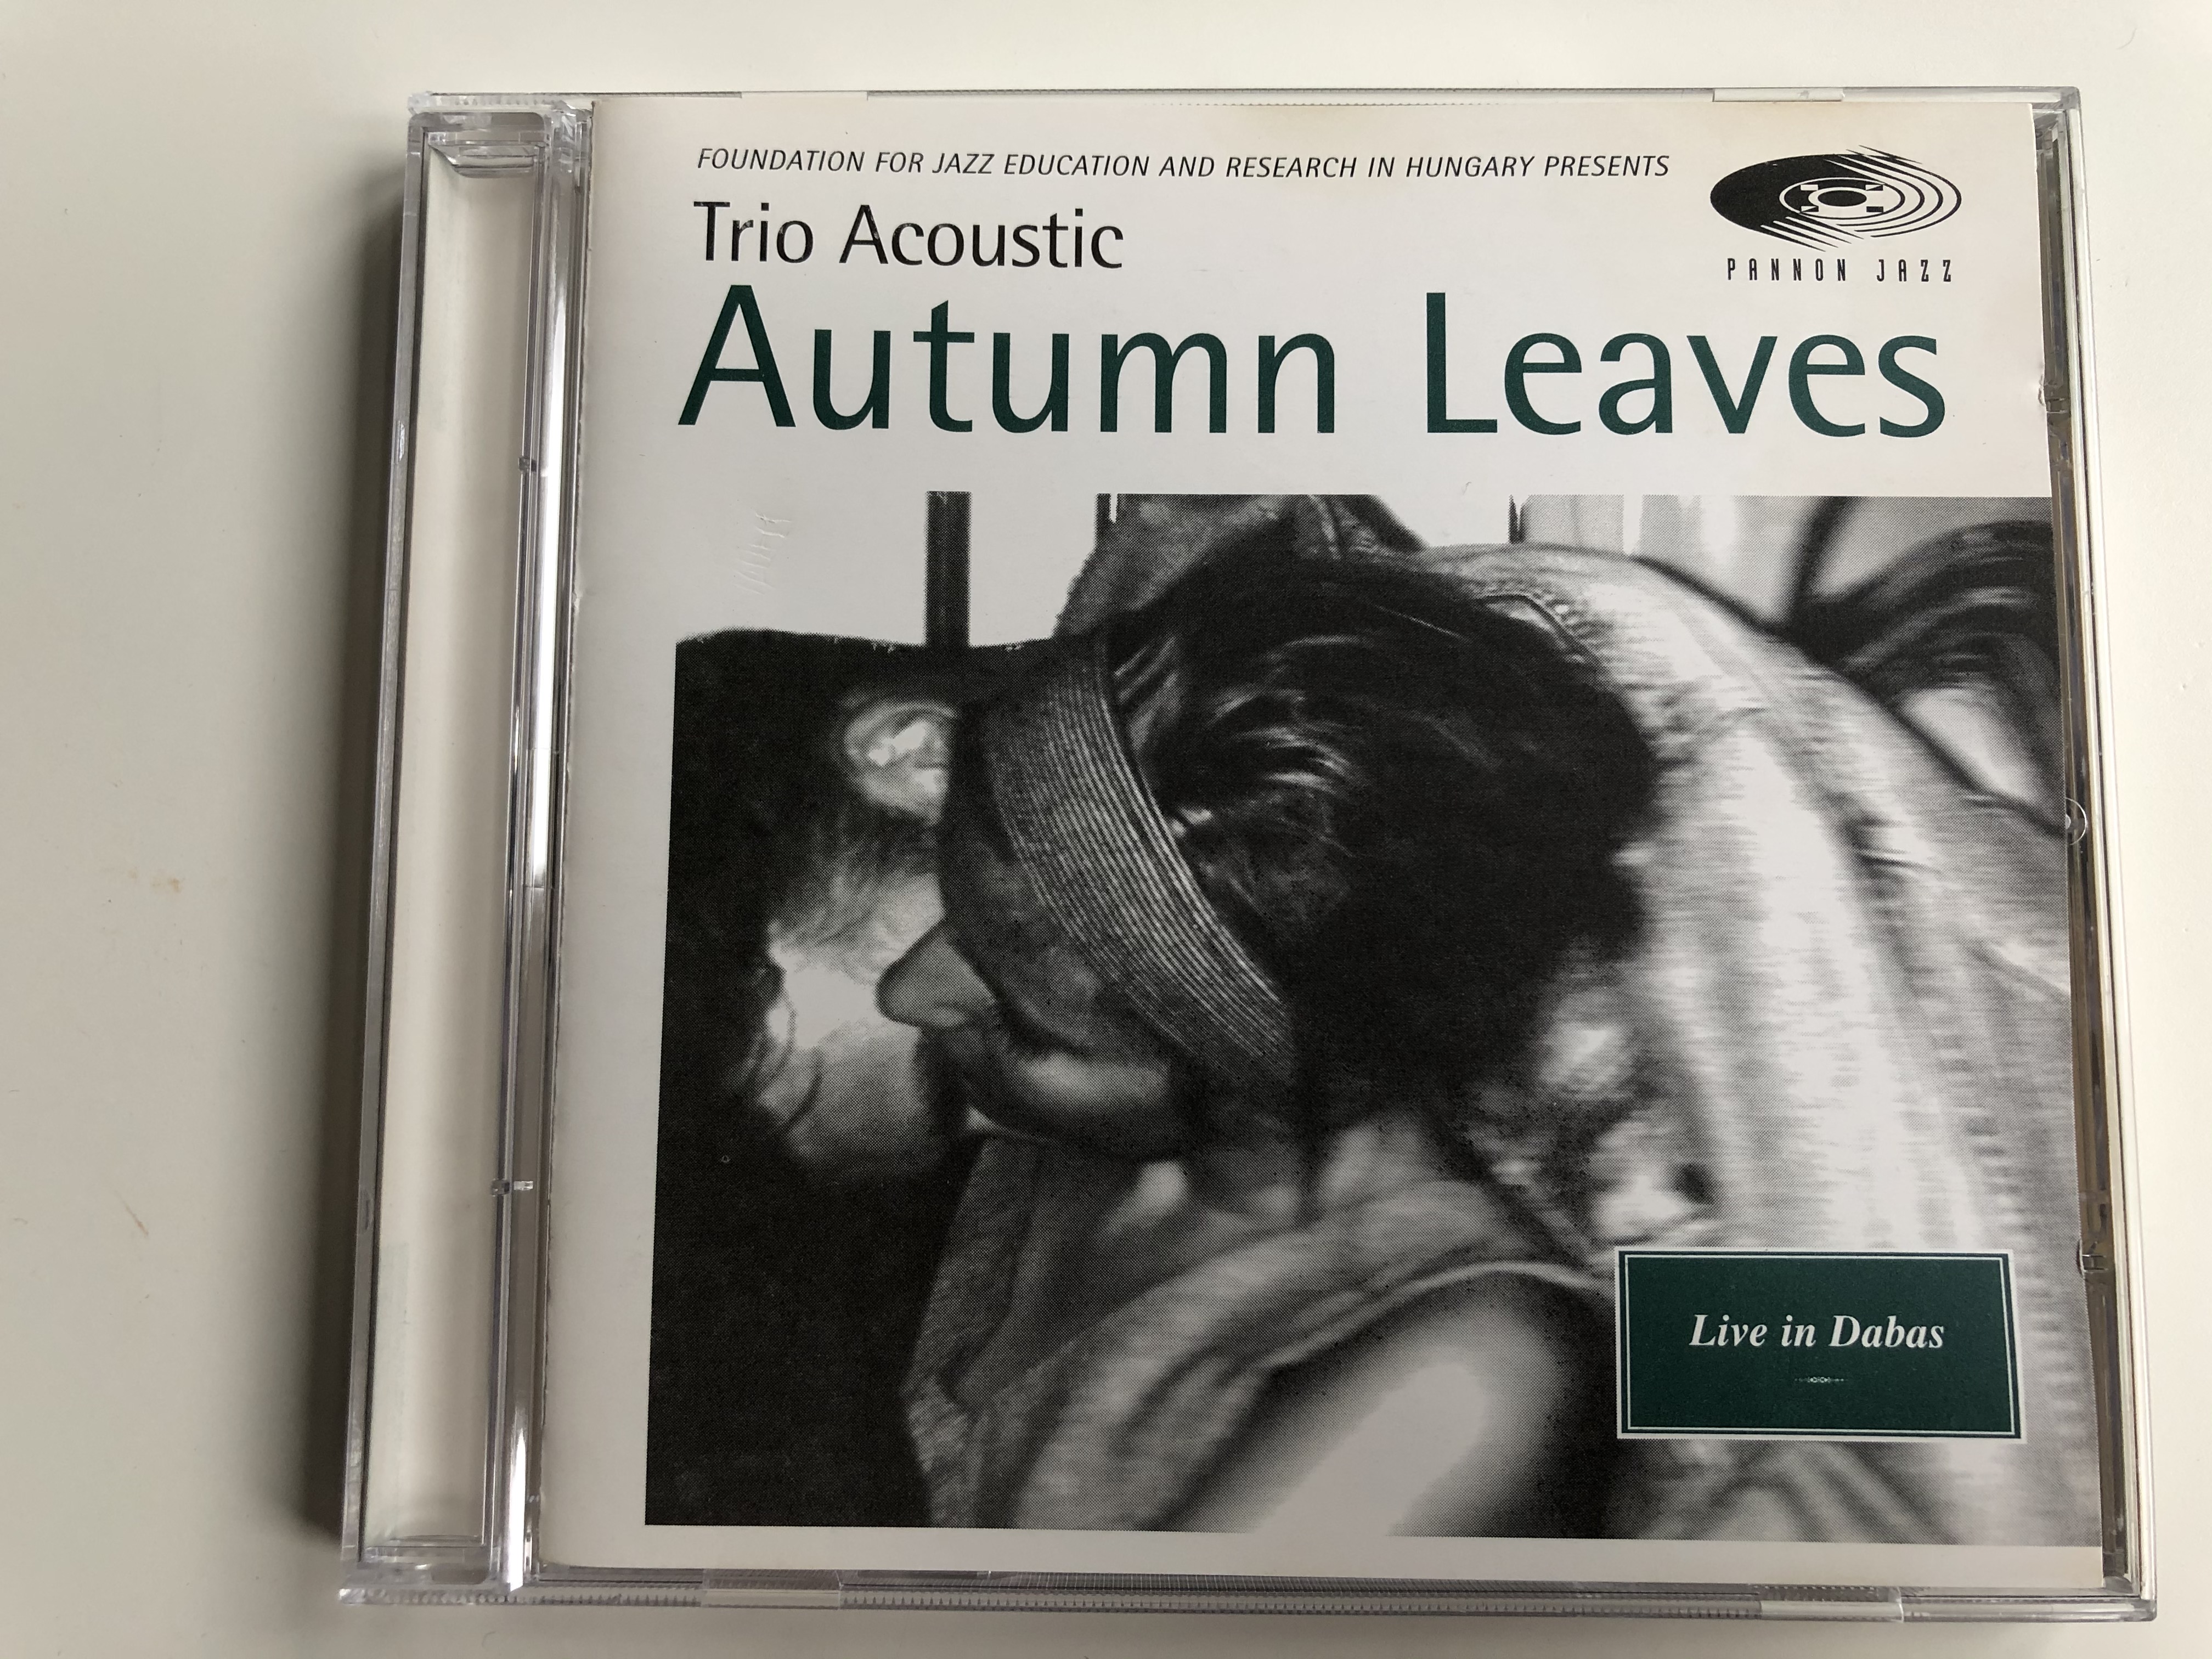 trio-acoustic-autumn-leaves-live-in-dabas-pannon-jazz-audio-cd-1995-pjj-1011-1-.jpg